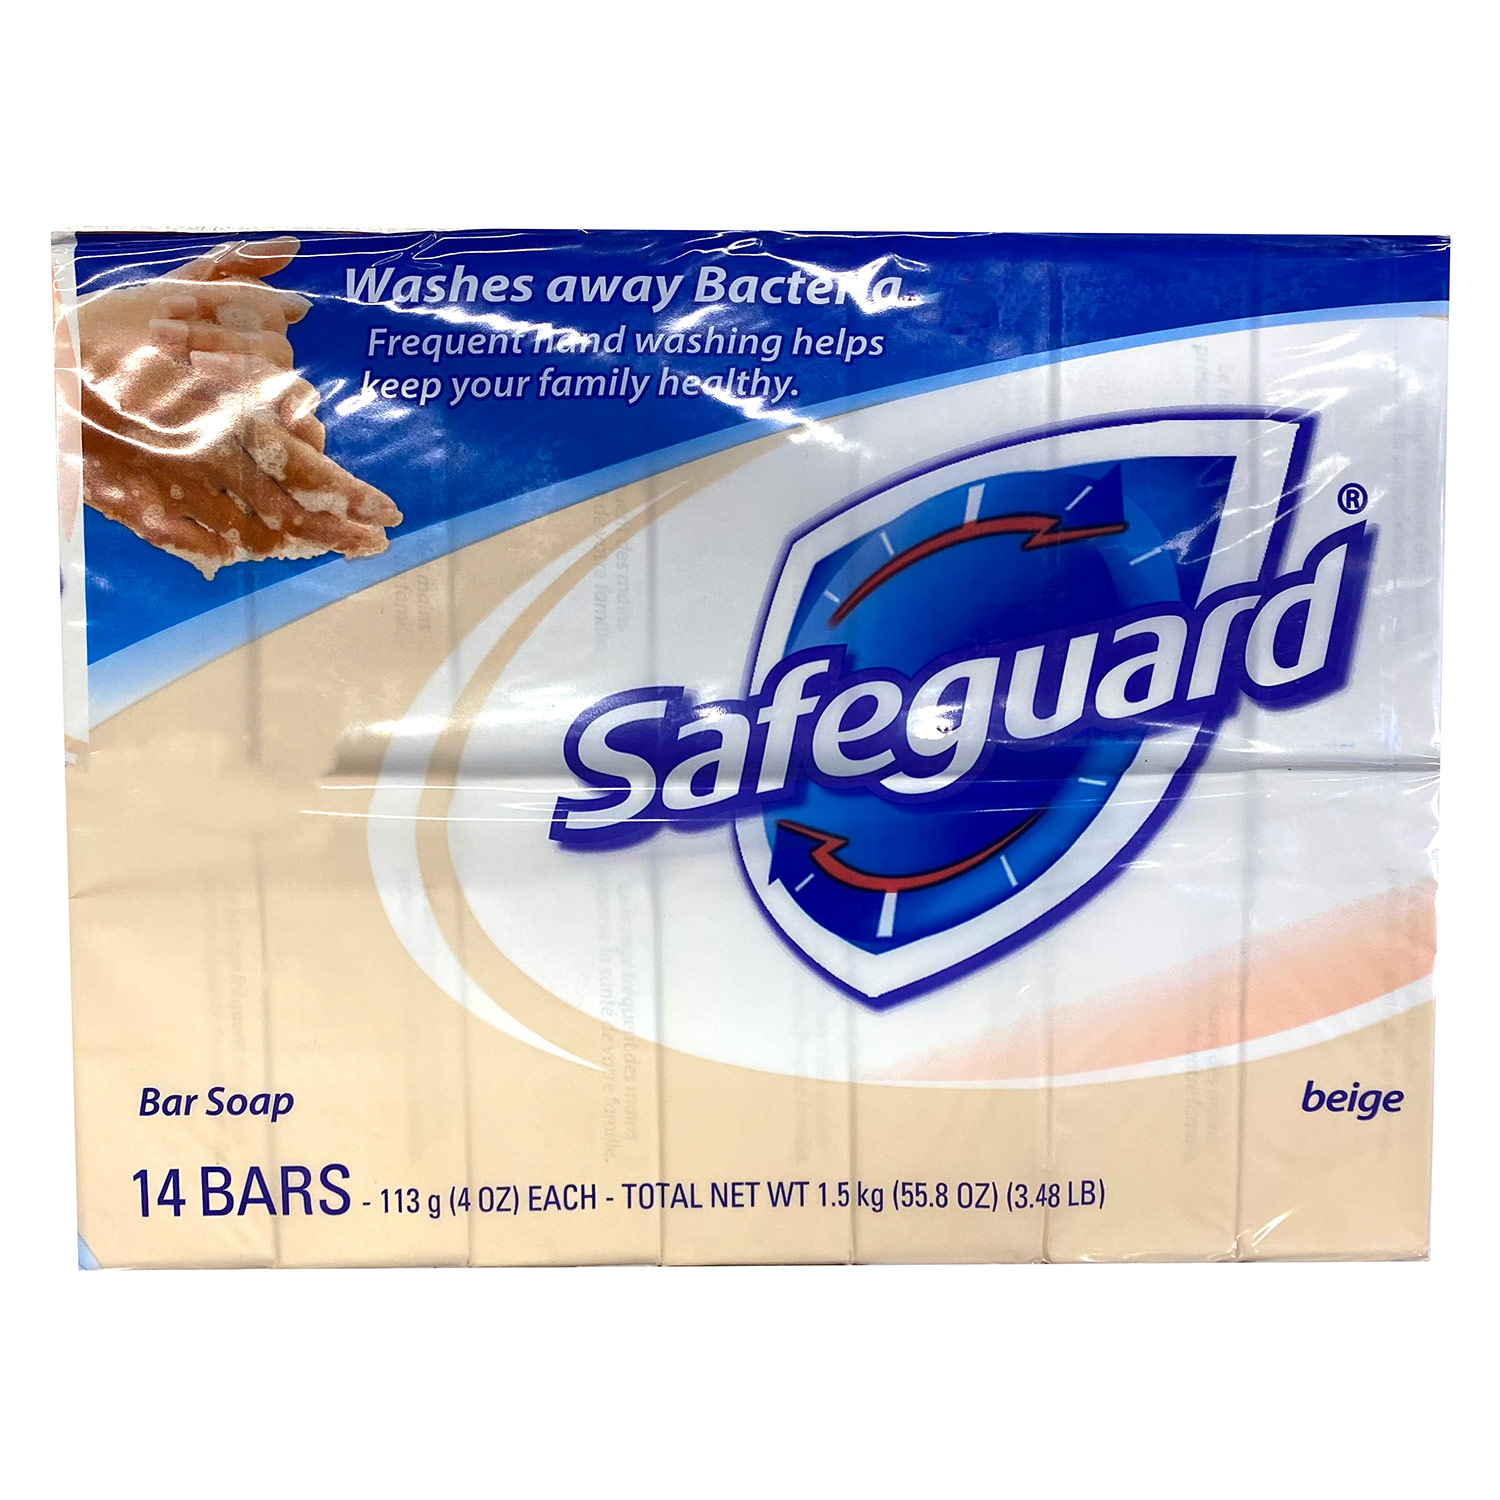 Safeguard Original Bar Soap, Beige, 4 Ounces, 14 Pack - image 1 of 6